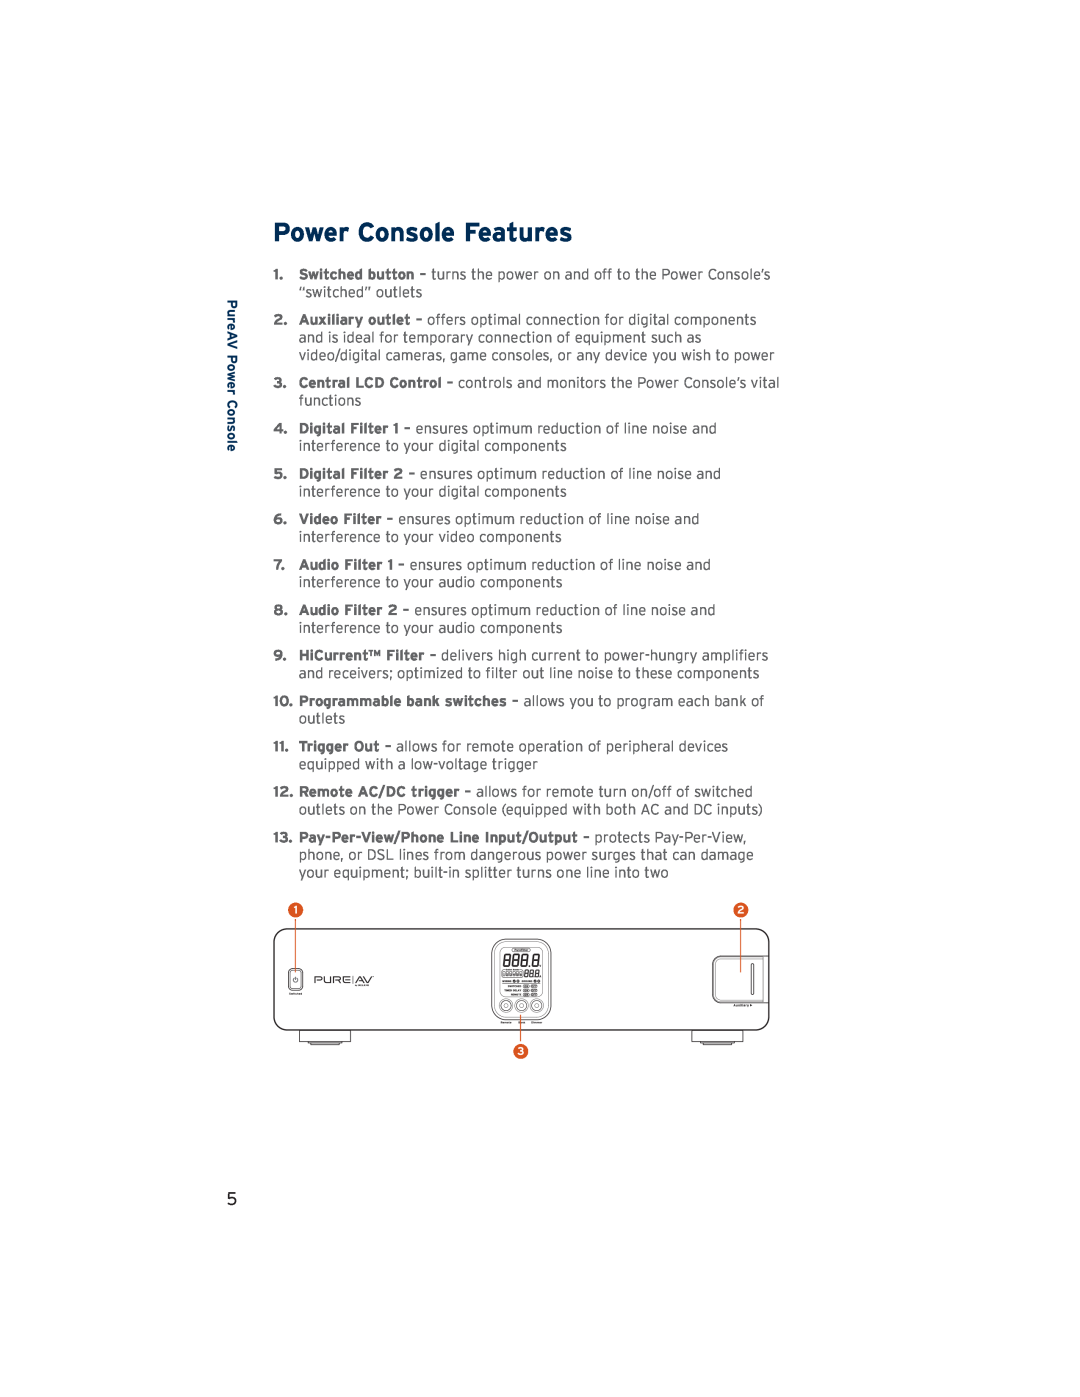 Belkin PF60, AP41300-12 user manual Power Console Features, PureAV Power Console 